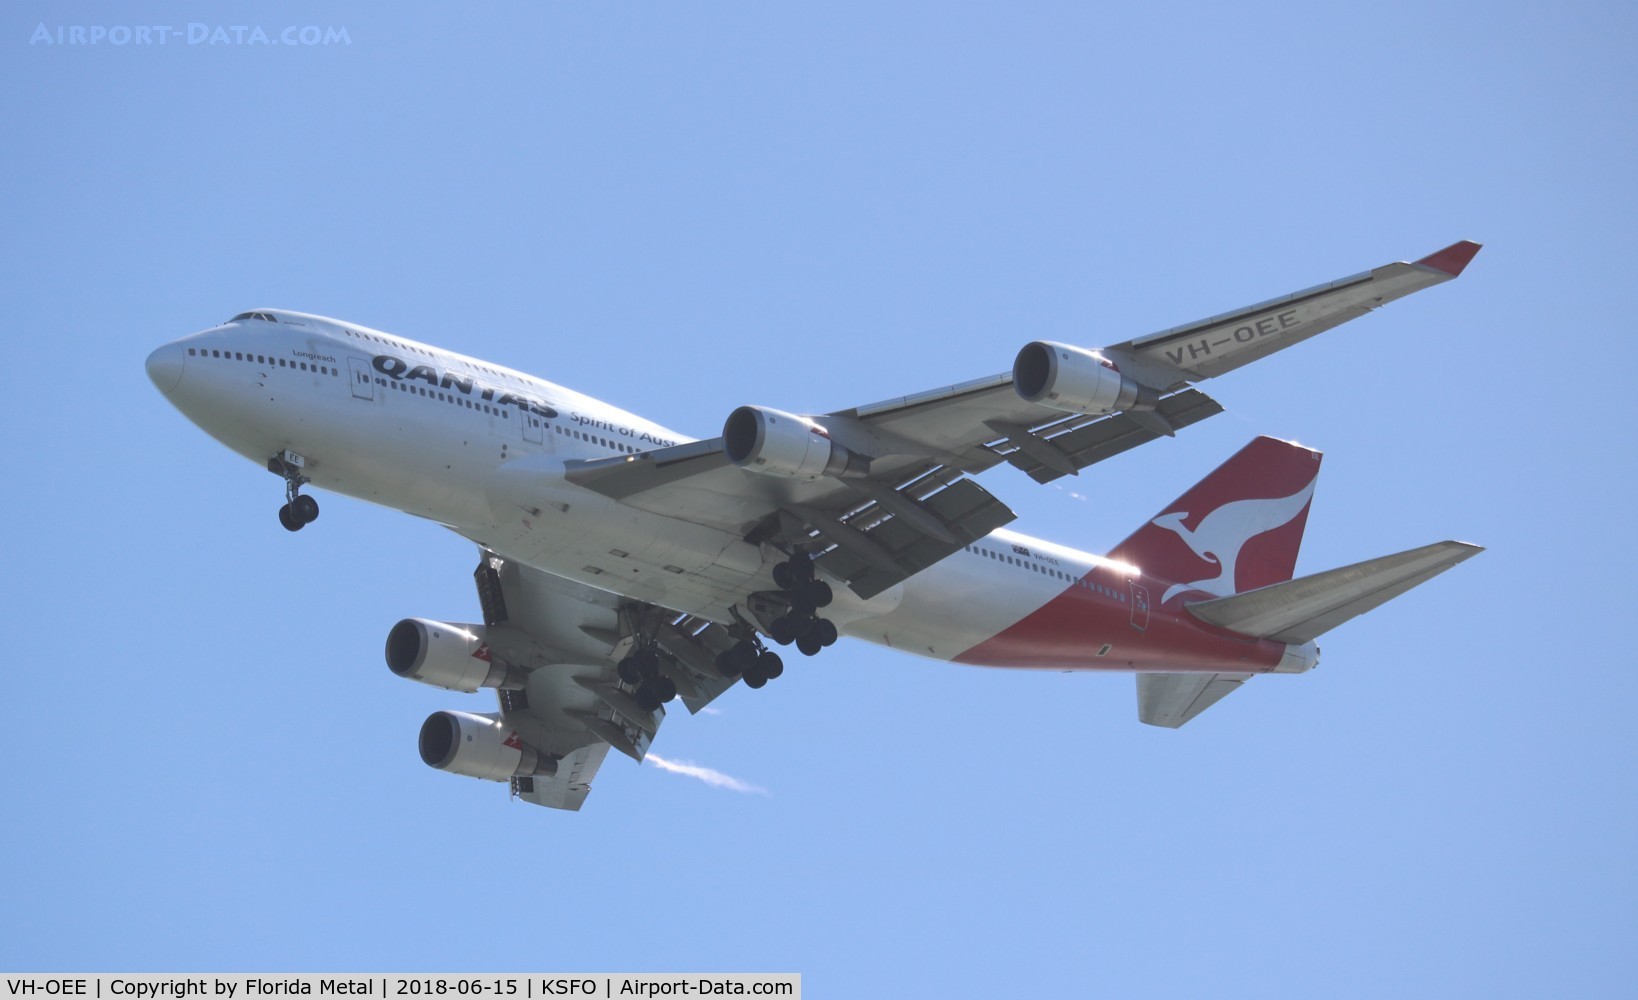 VH-OEE, 2002 Boeing 747-438/ER C/N 32909, SFO spotting 2018